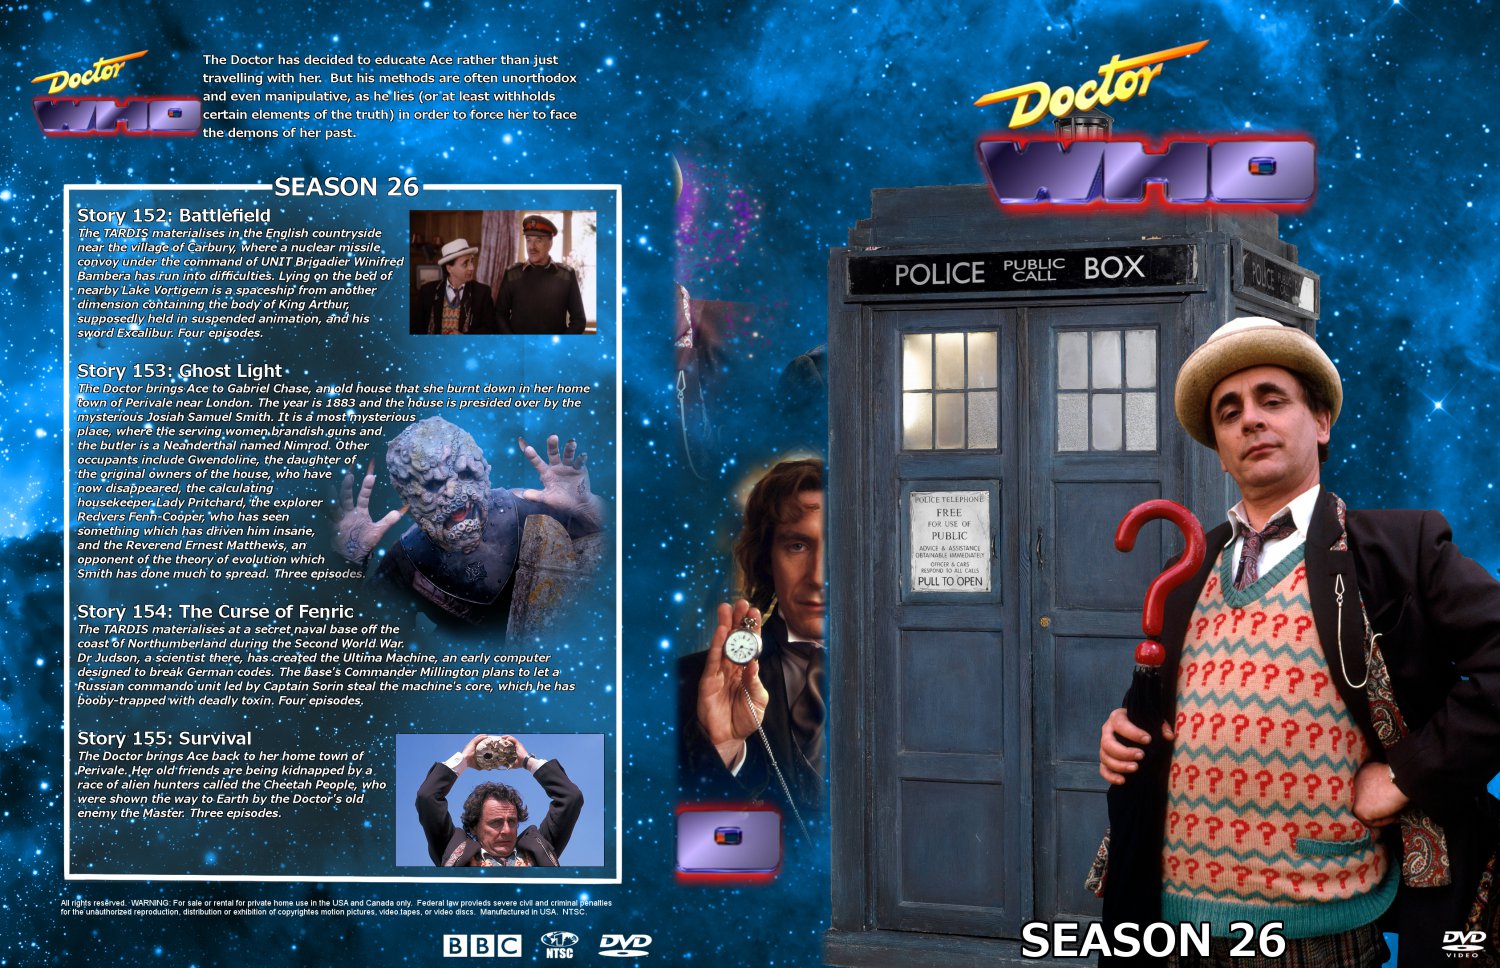 Amazoncom: Doctor Who Classic Season 26